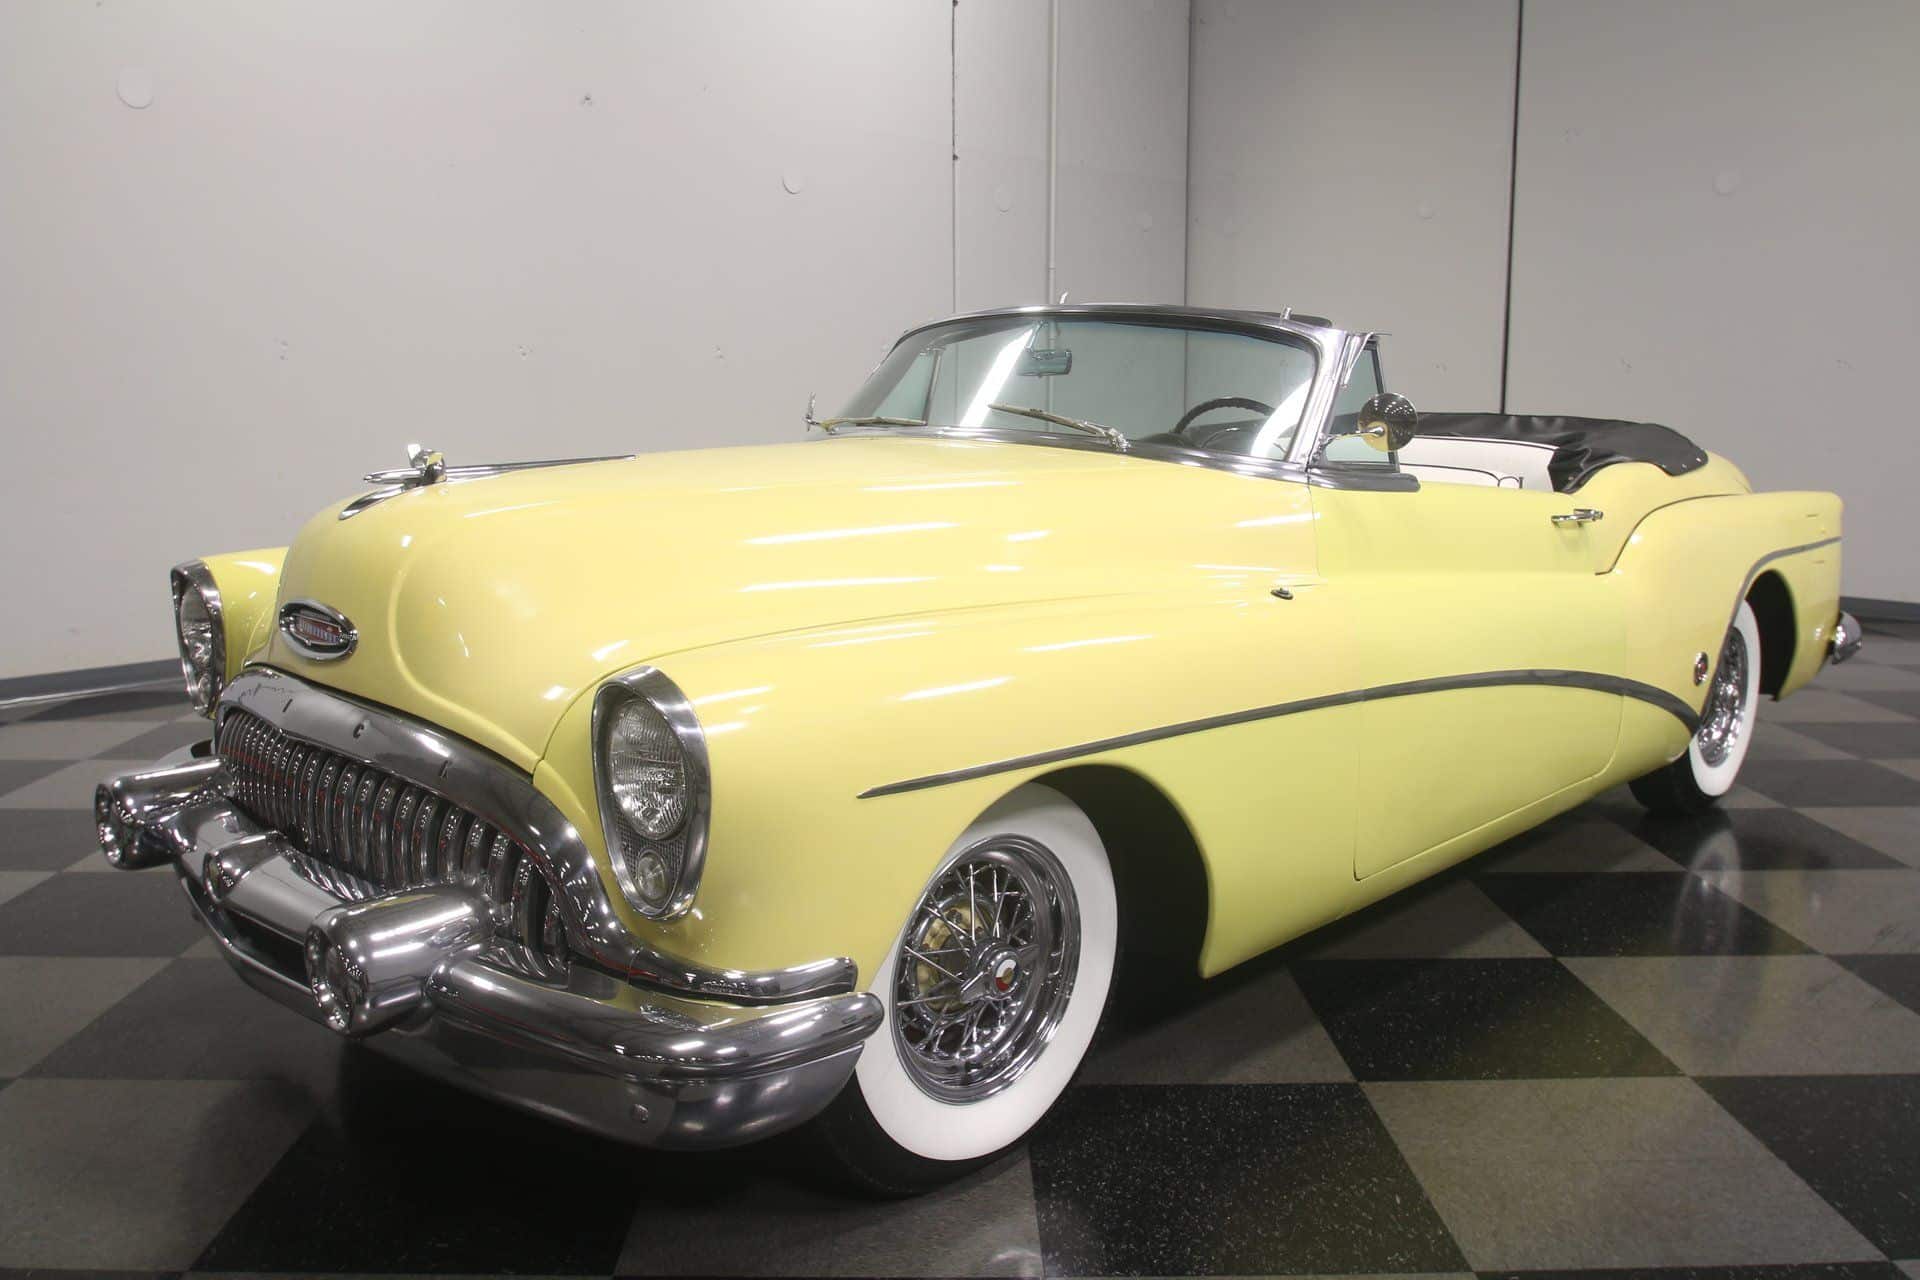 Buick Skylark amarillo de 1953 sobre suelo a cuadros